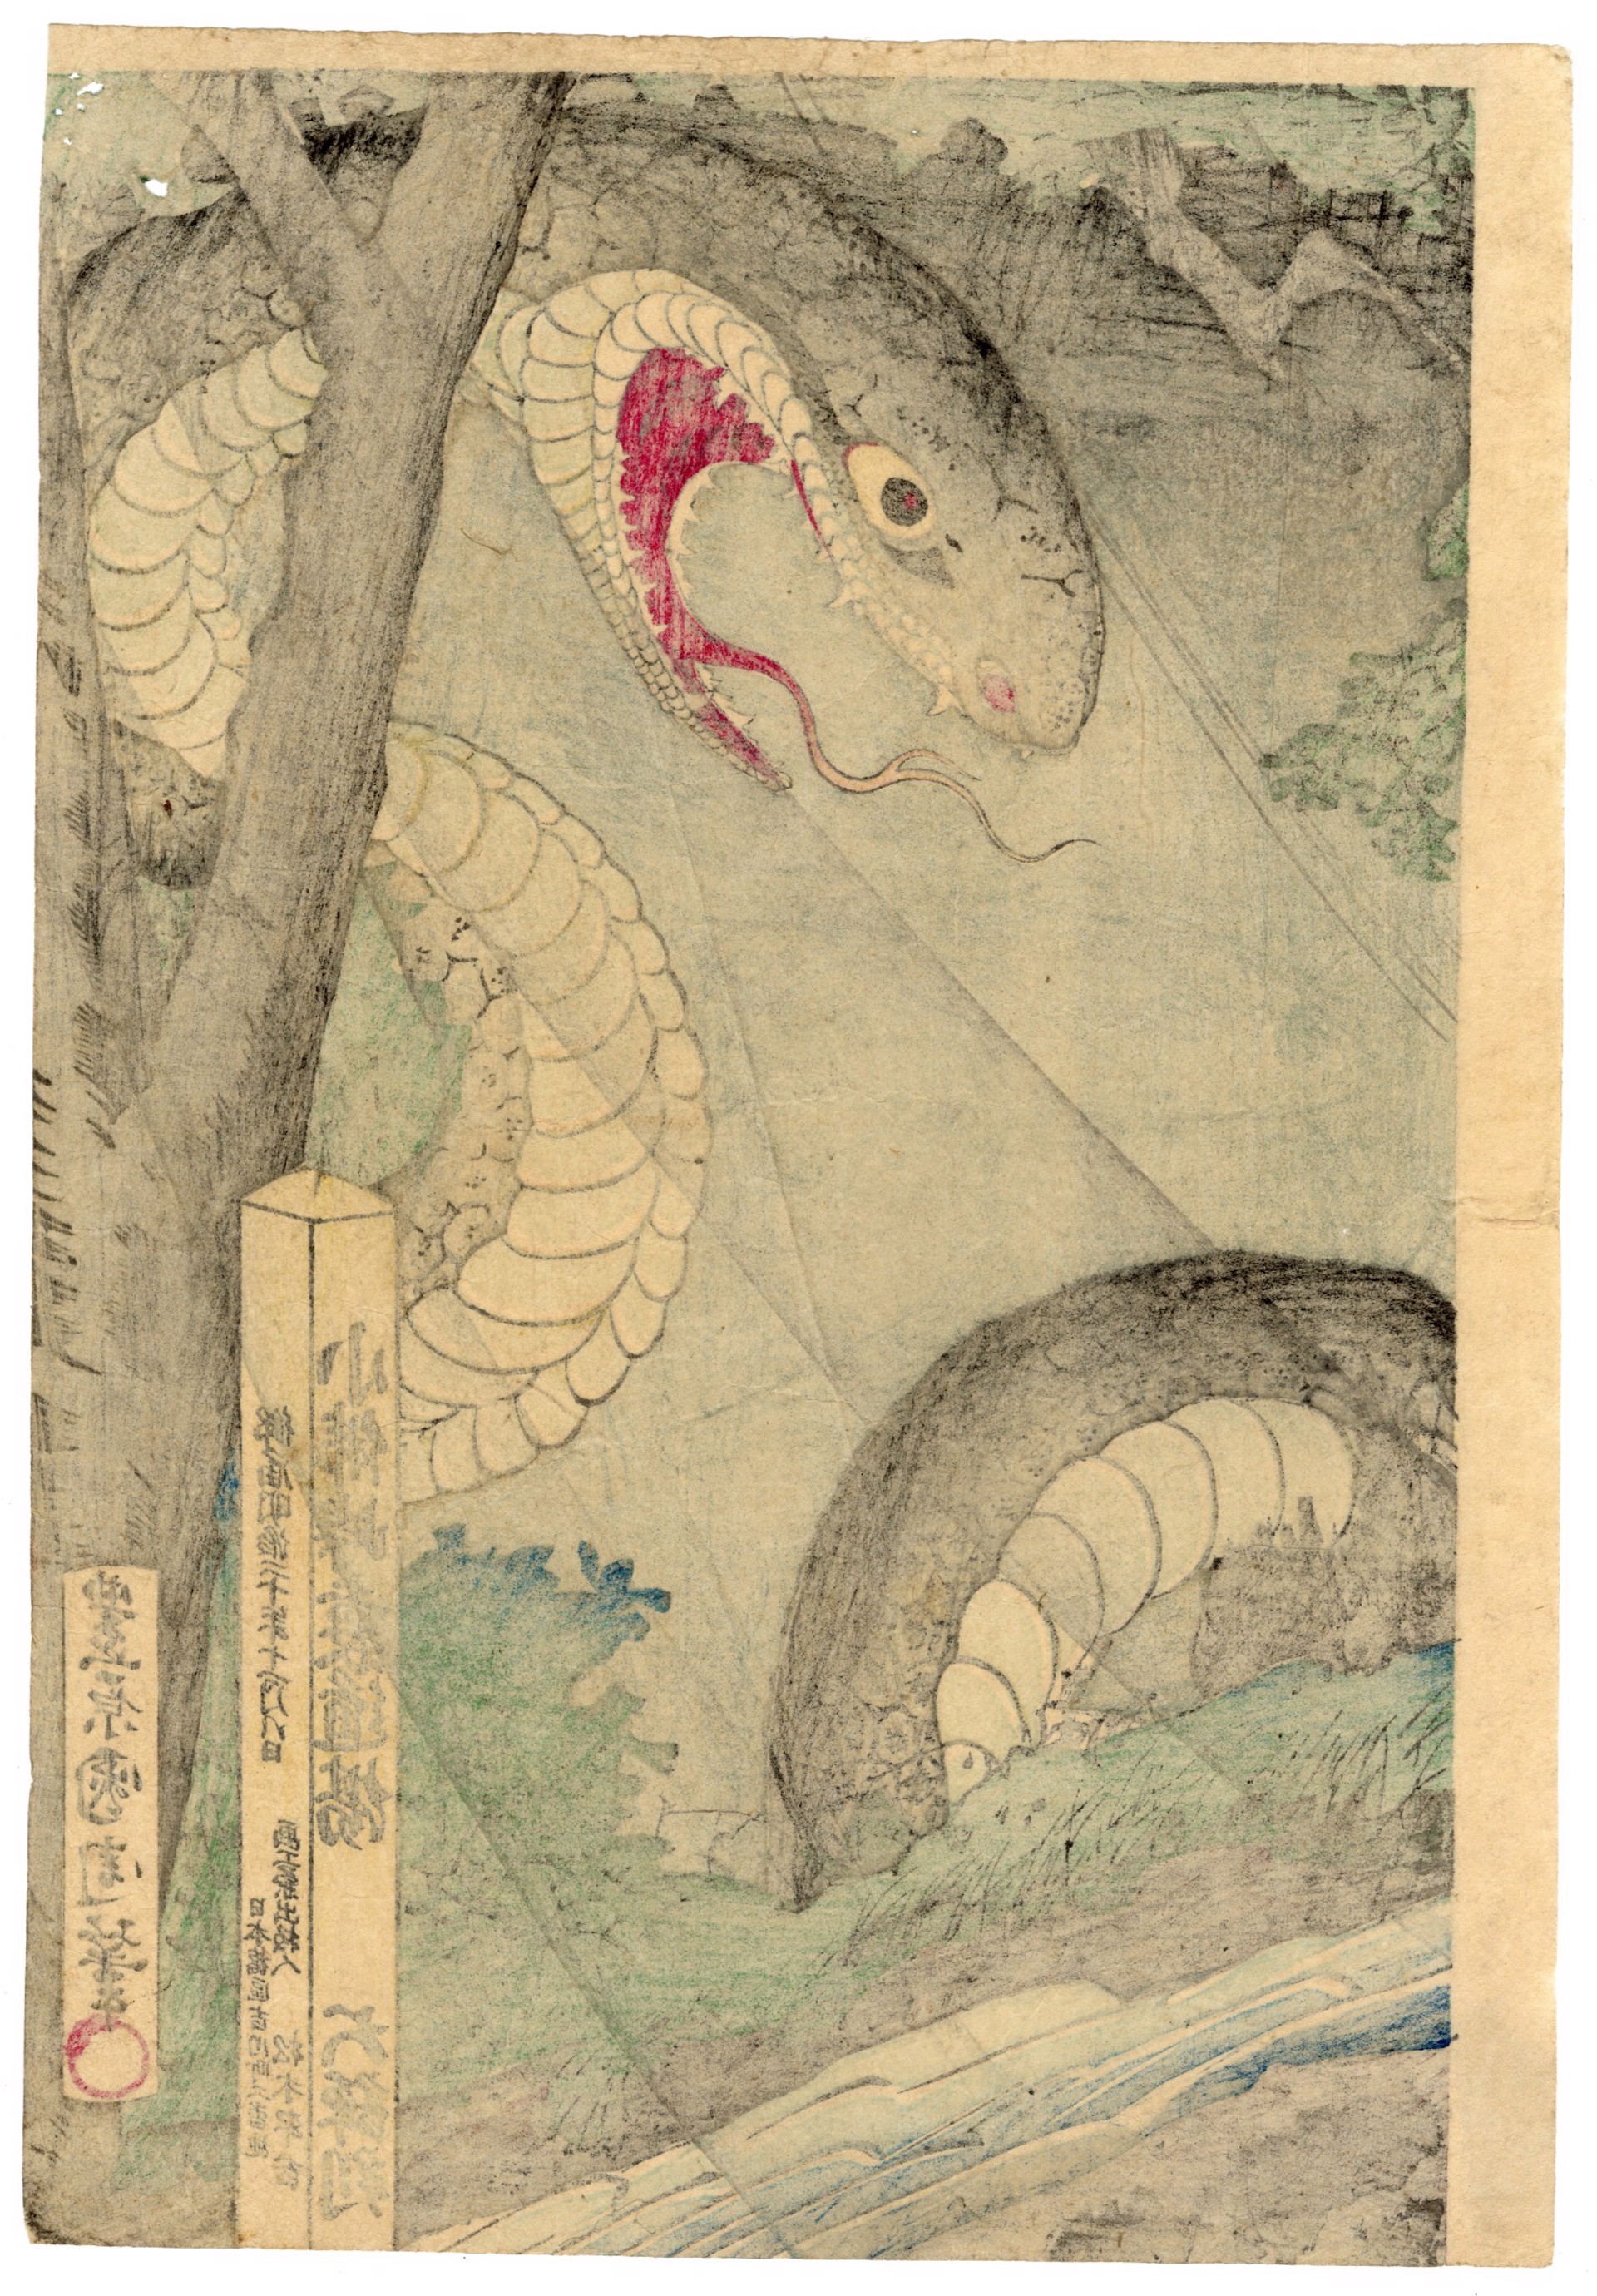 Onoe Kikugoro V as Saijiro, the Habadashery Dealer Battling a Giant Snake by Kunichika